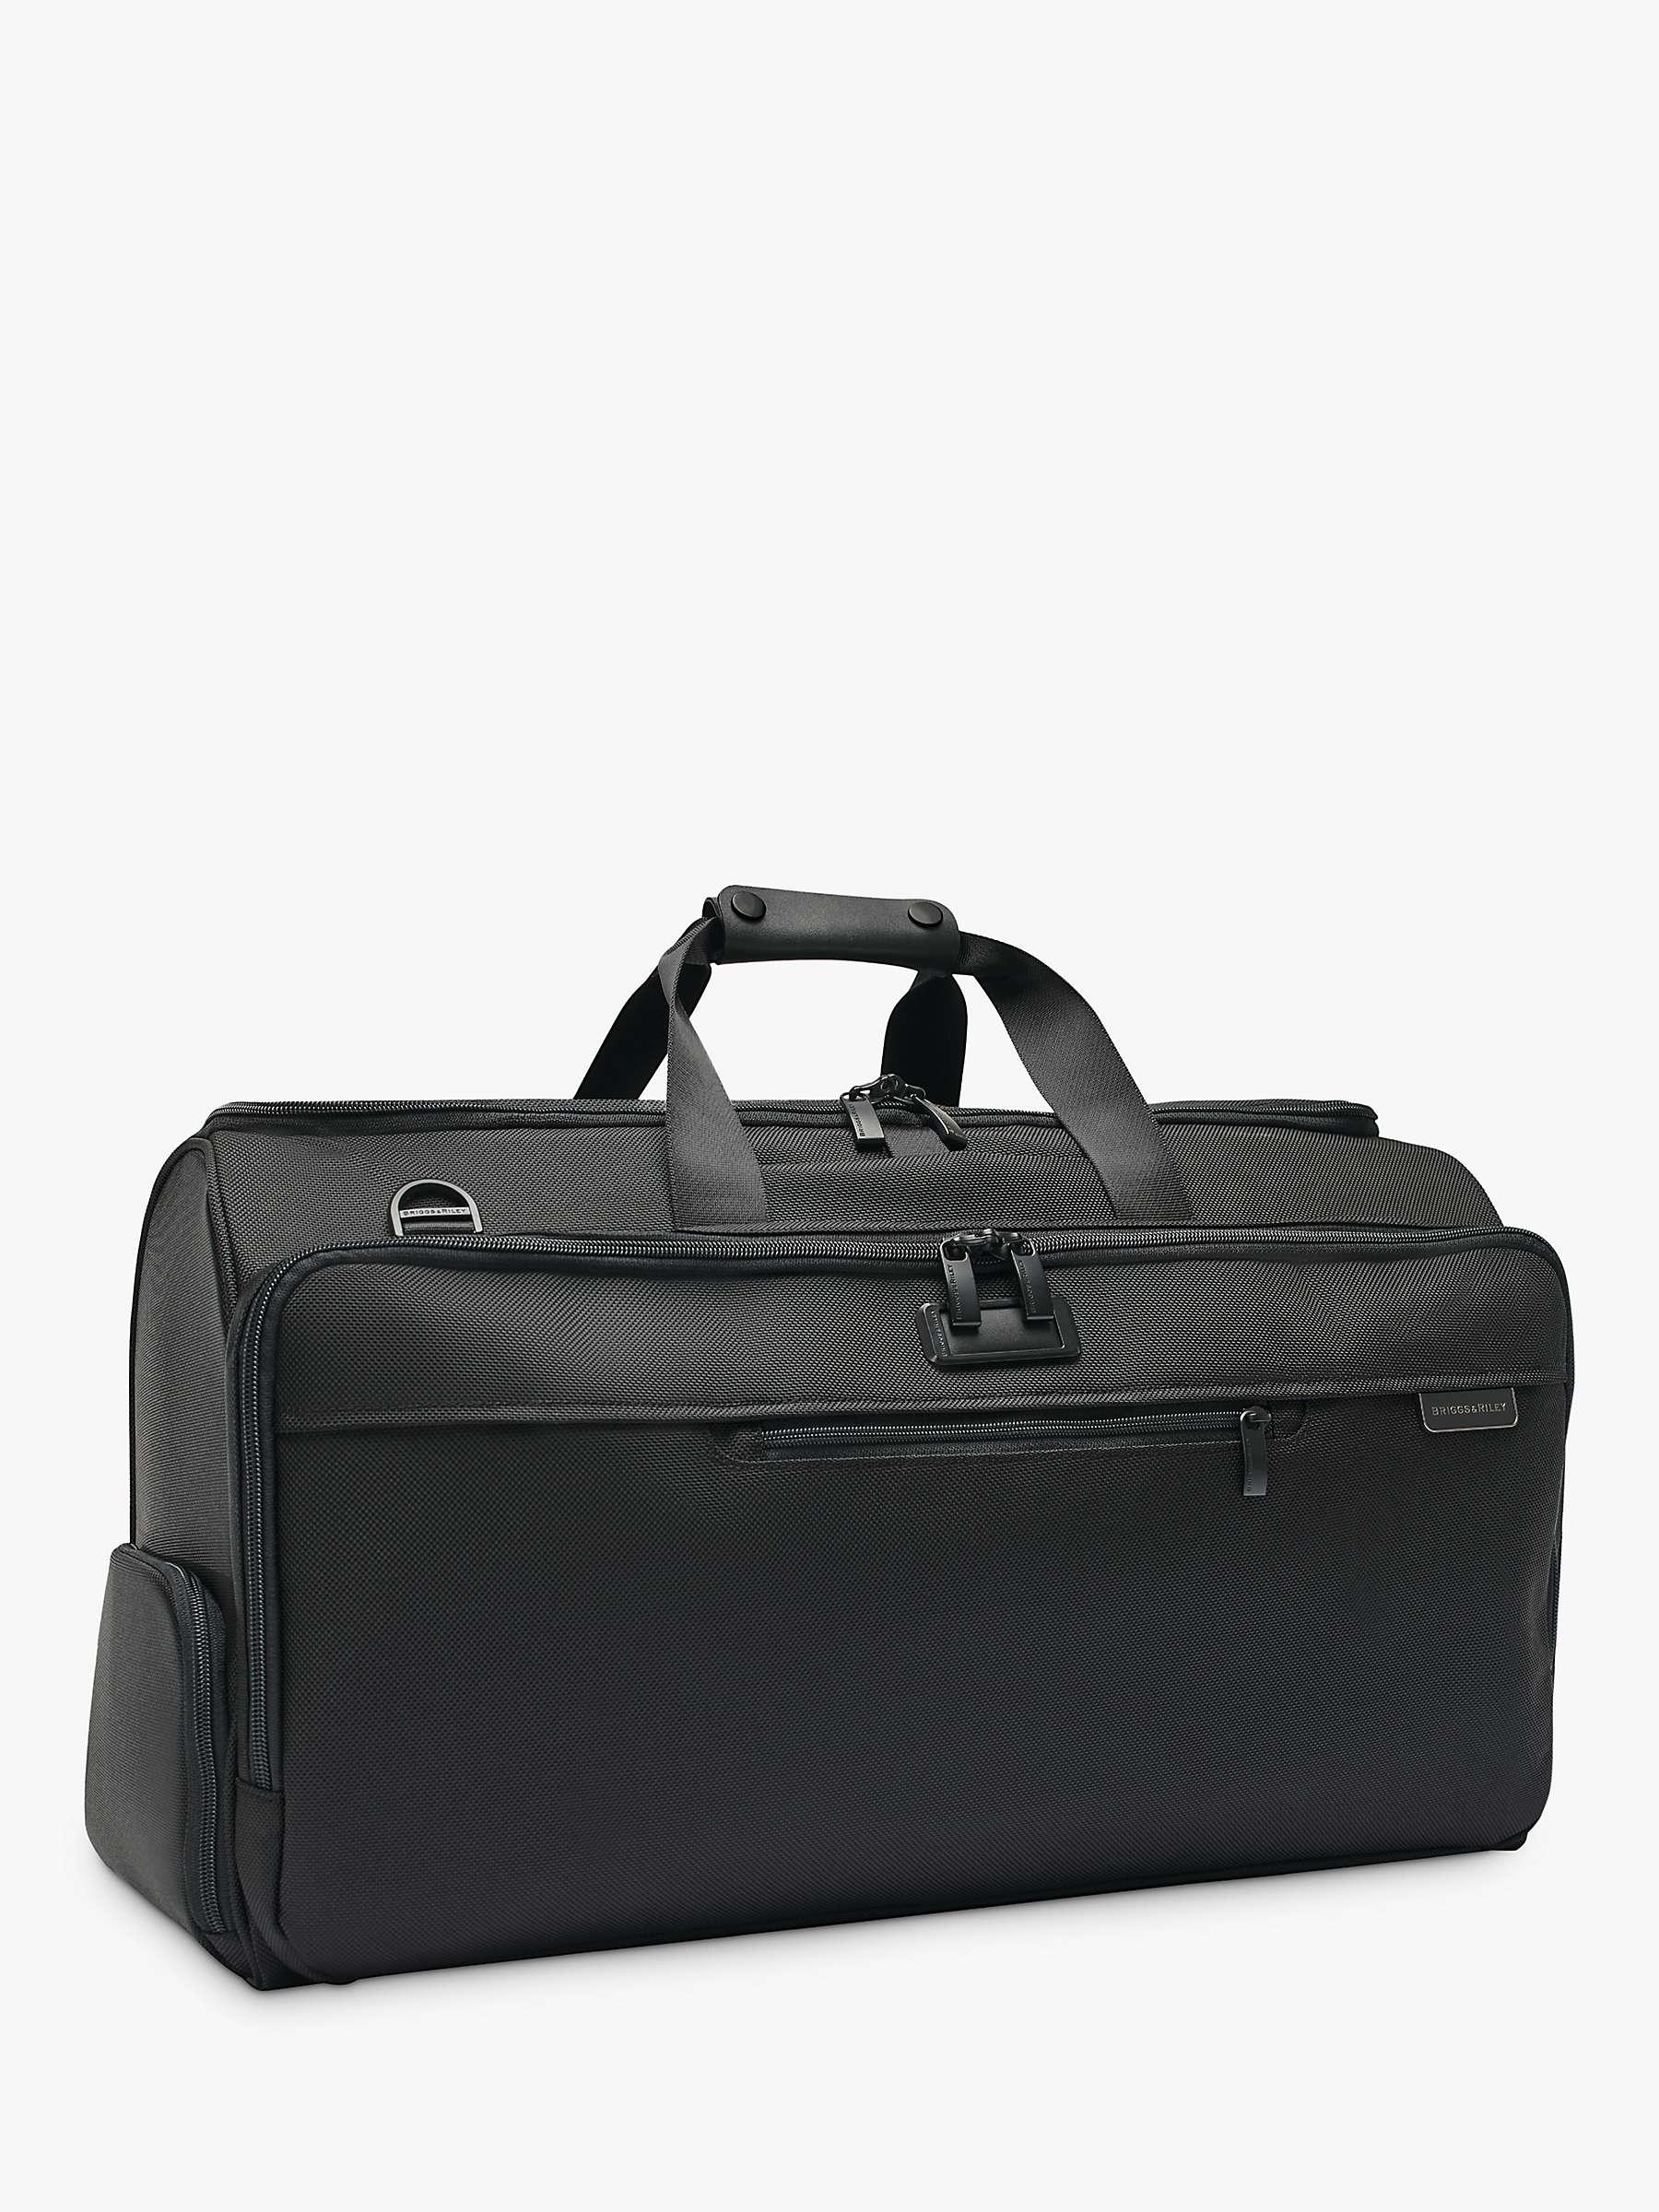 Buy Briggs & Riley Baseline Garment Duffle Bag Online at johnlewis.com